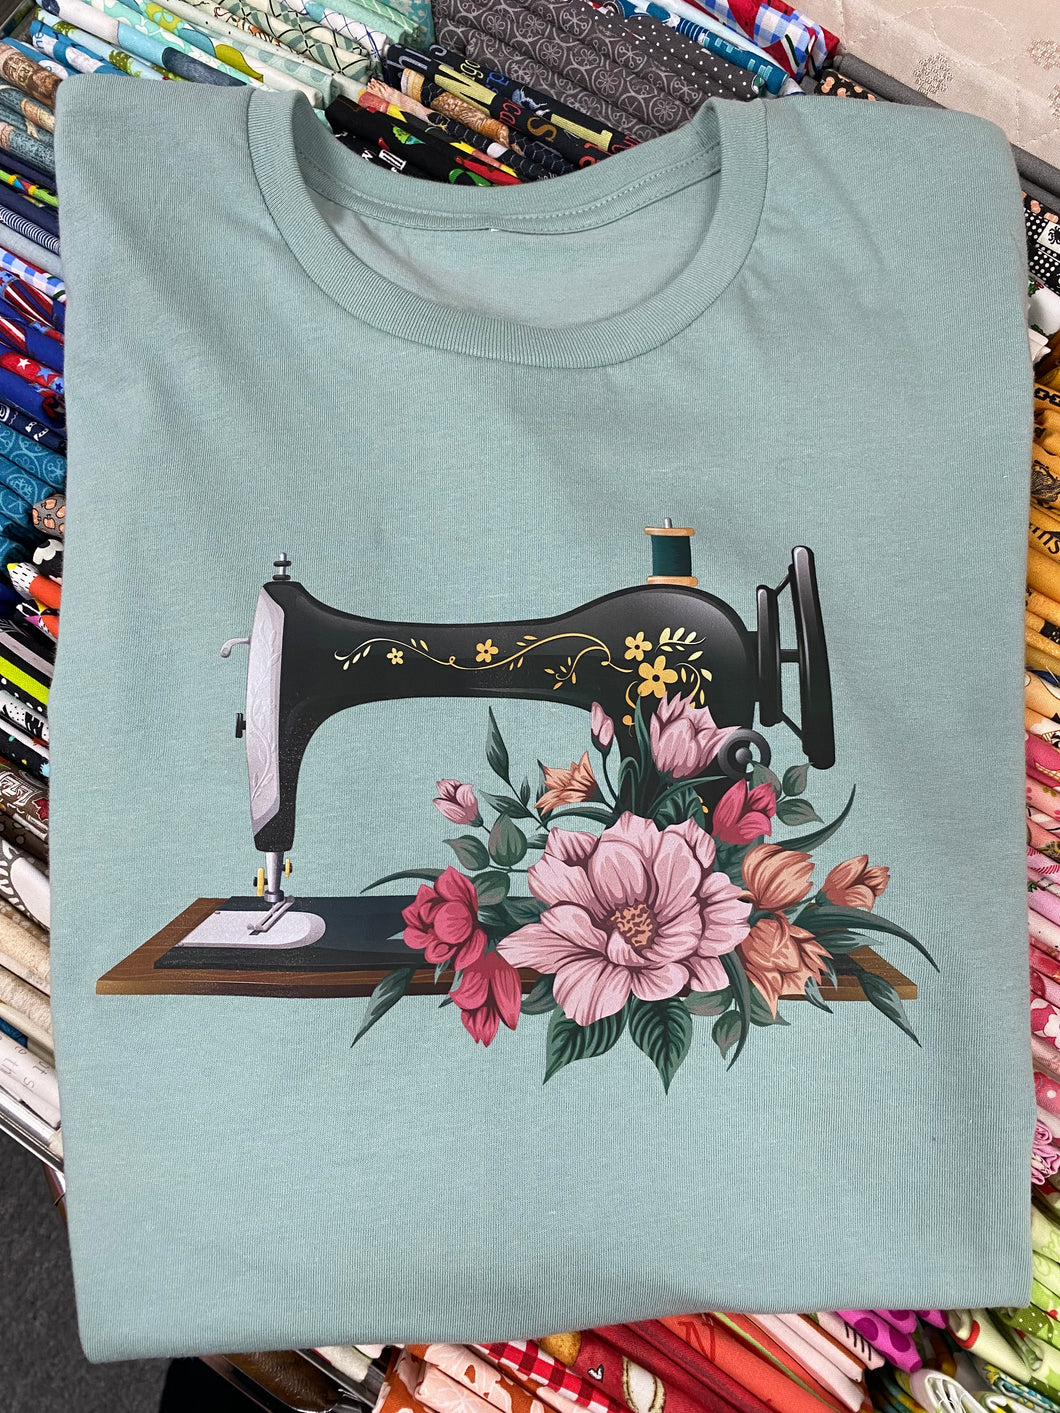 Floral Vintage Sewing Machine T-Shirt